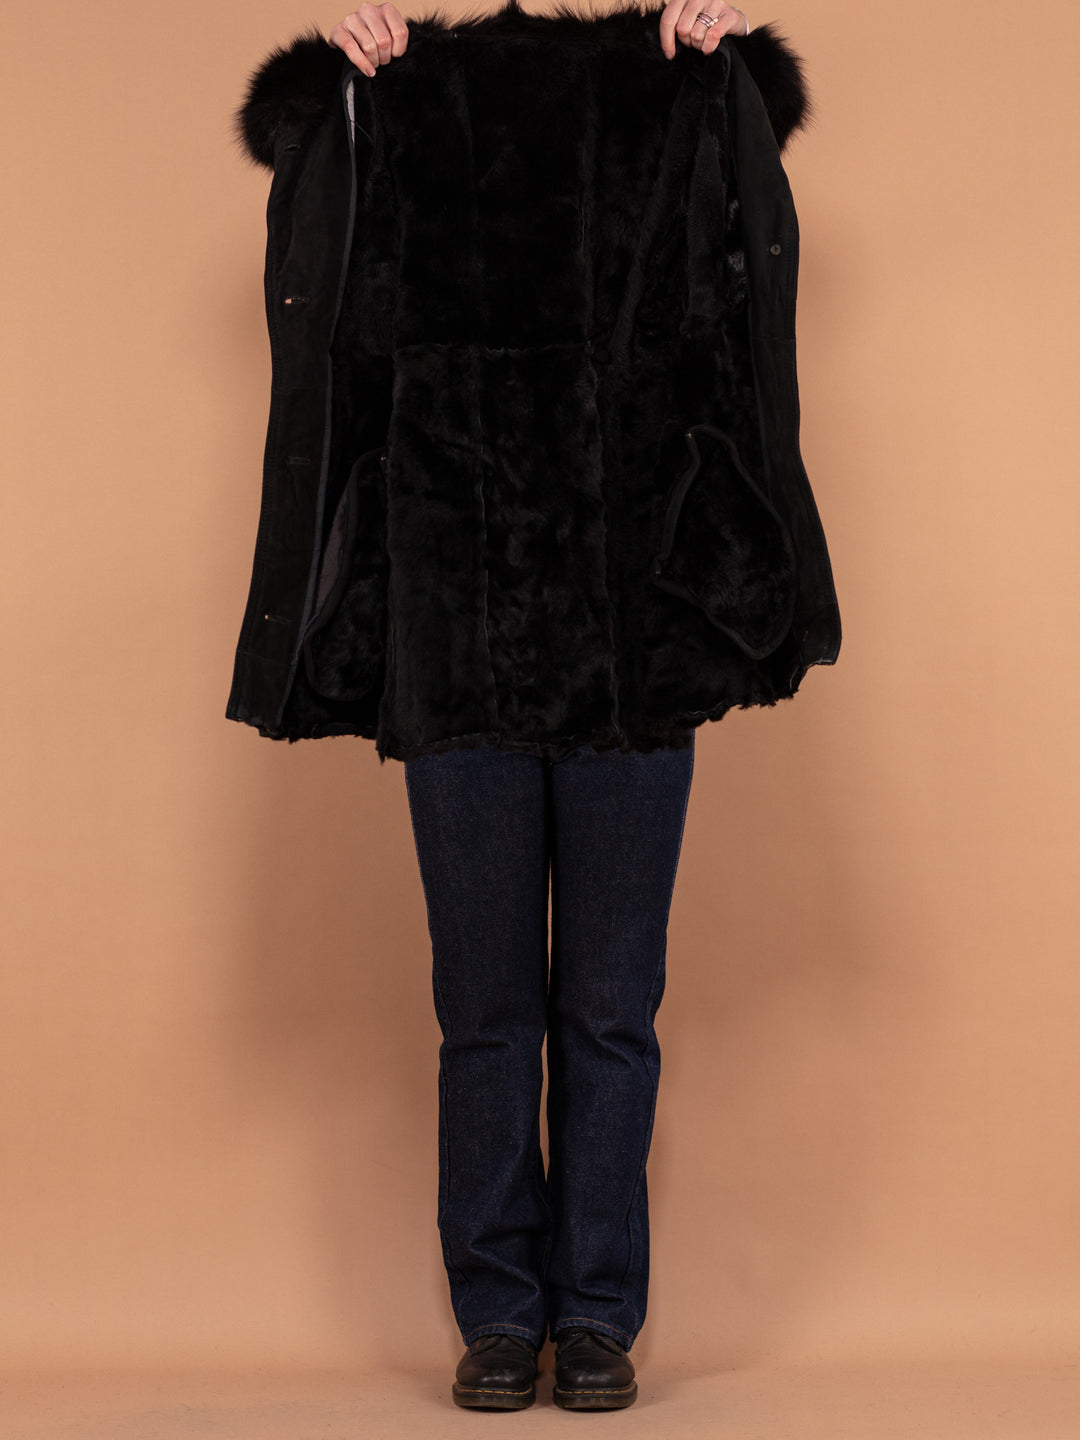 Black Sheepskin Coat 70's, Size L Vintage Fur Coat, Black Shearling Wool Coat, Western Afghan Coat, Black Penny Lane Coat, Almost Famous